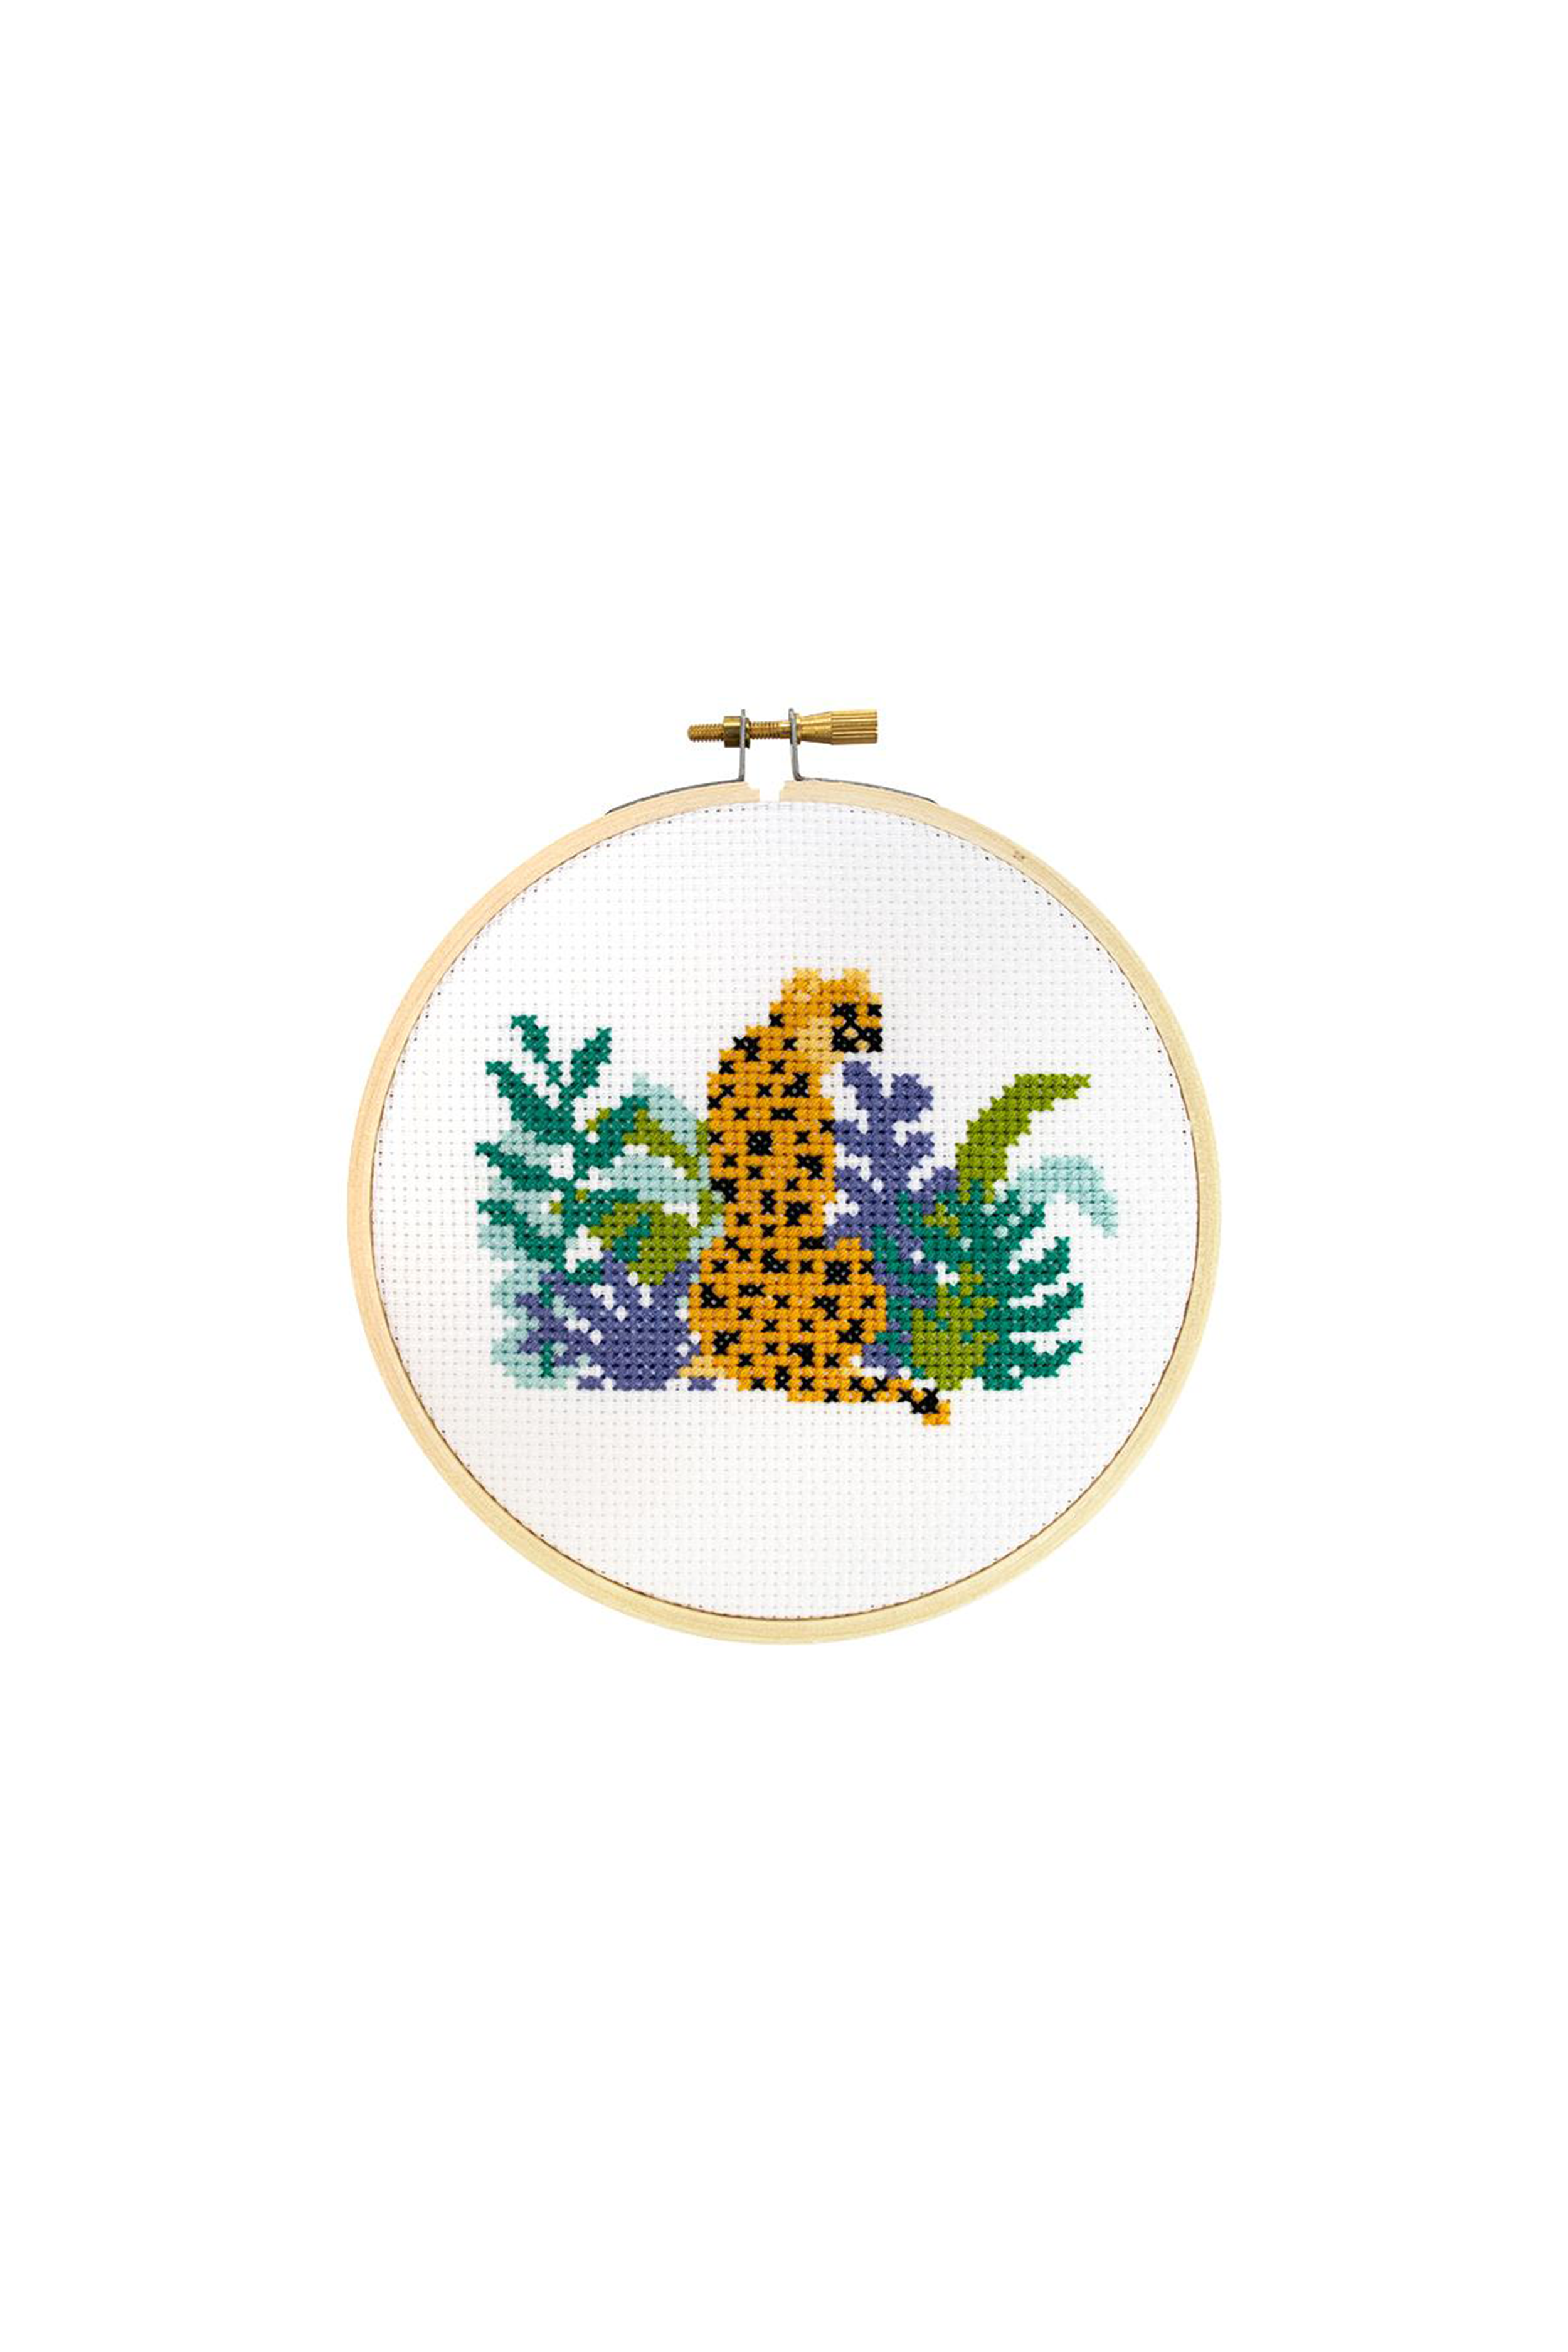 Cheetah Cross Stitch